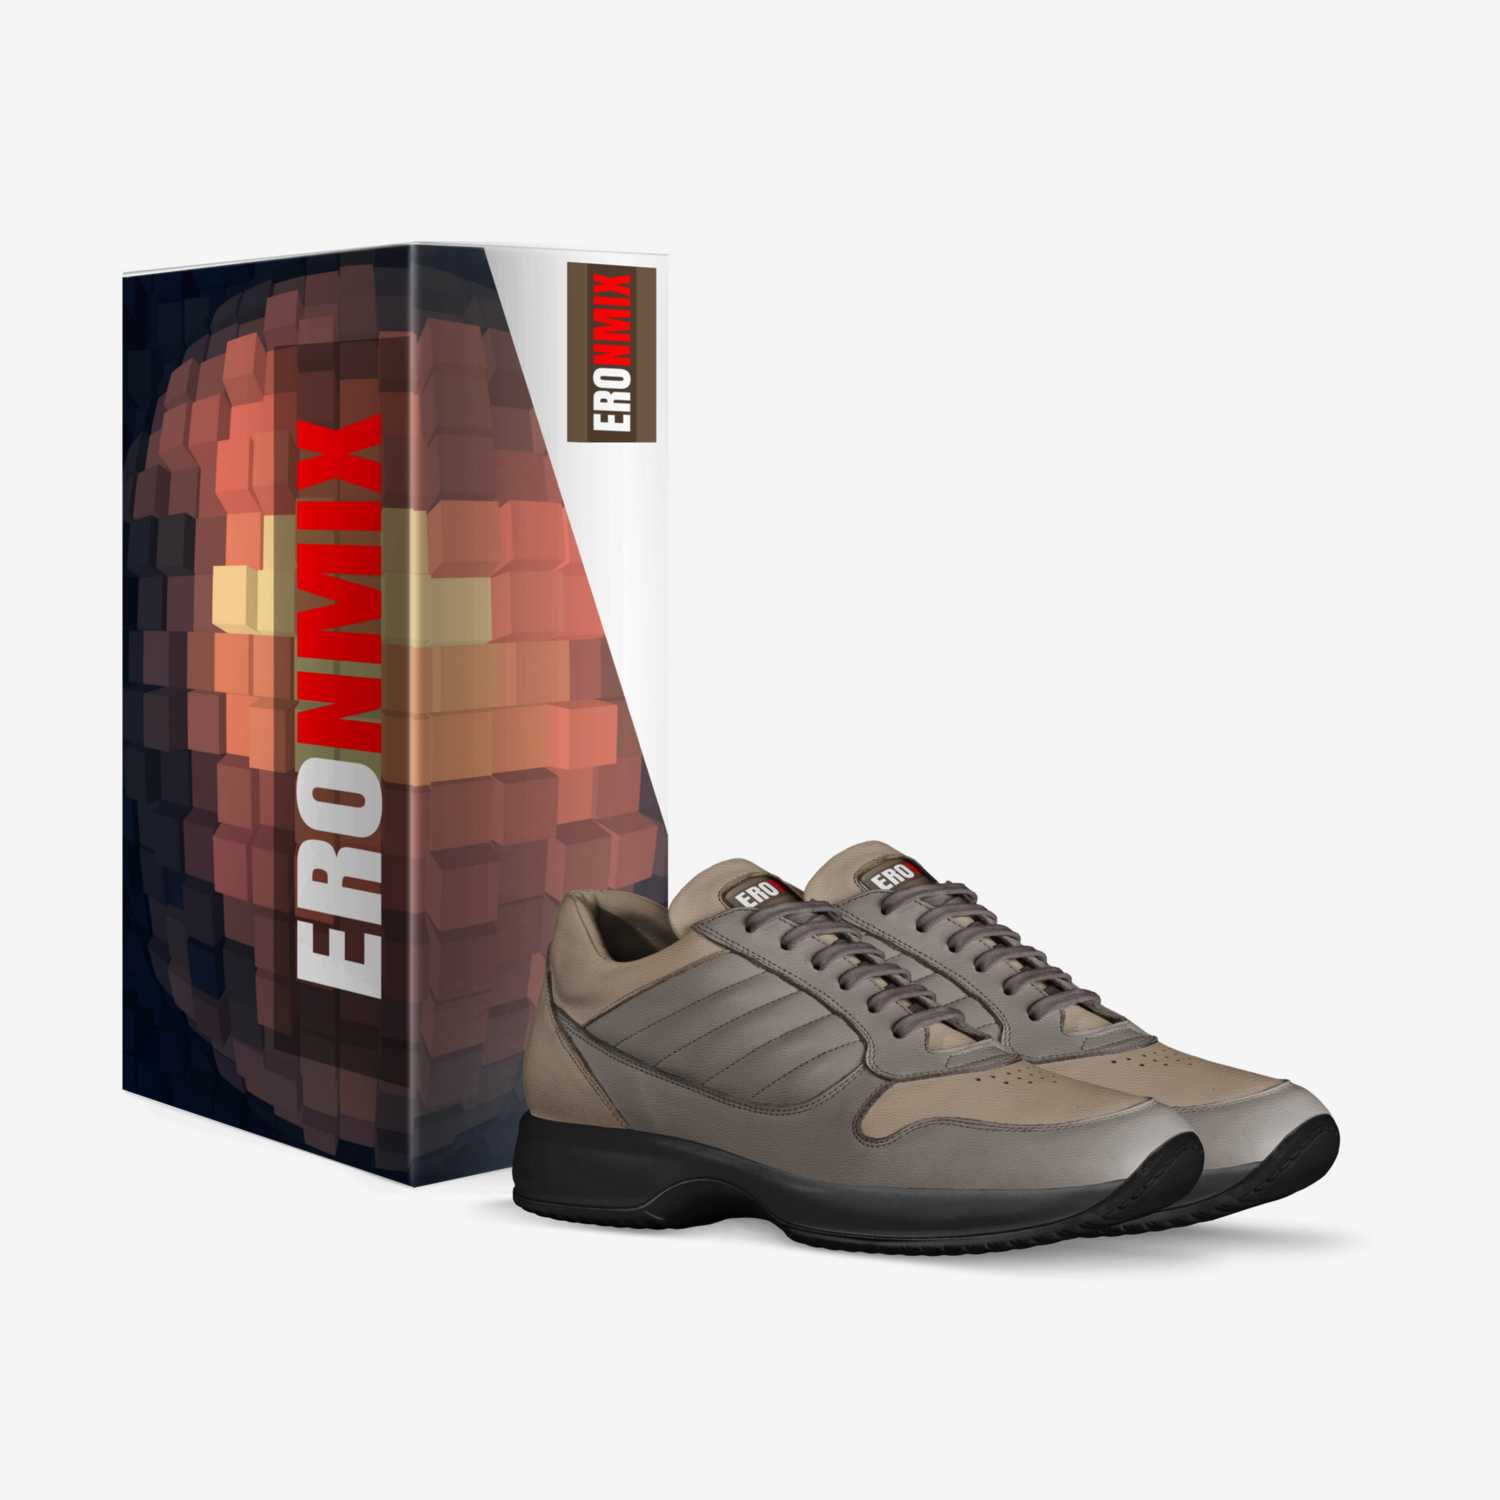 Eronmix Zone-Walks custom made in Italy shoes by Eduardo Ramirez | Box view